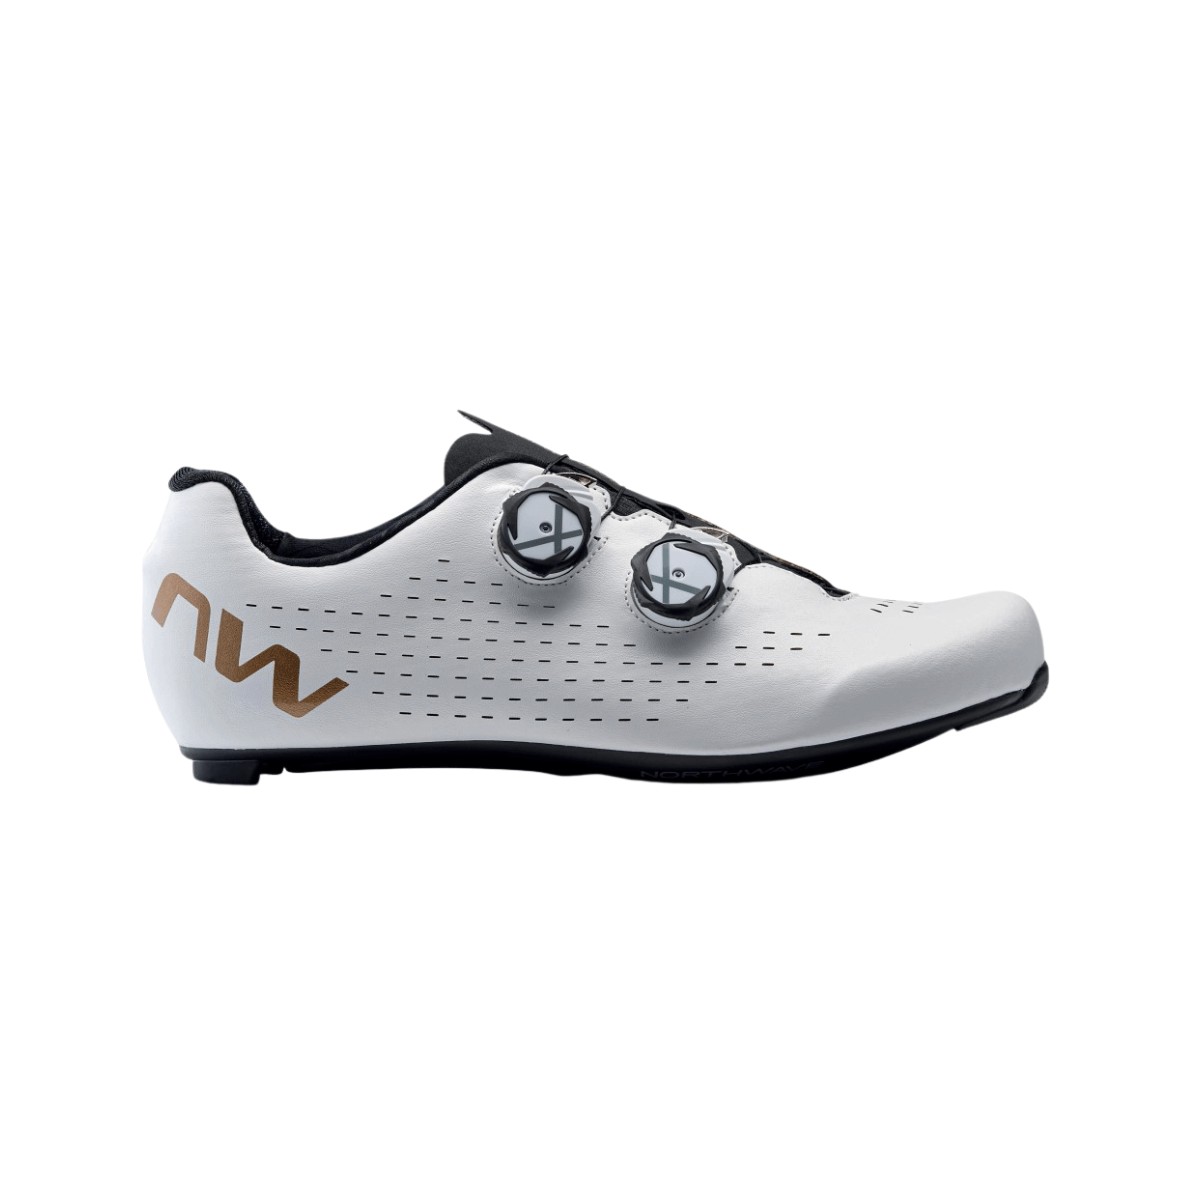 Northwave Revolution 3 Shoes White Bronce, Size 47 - EUR